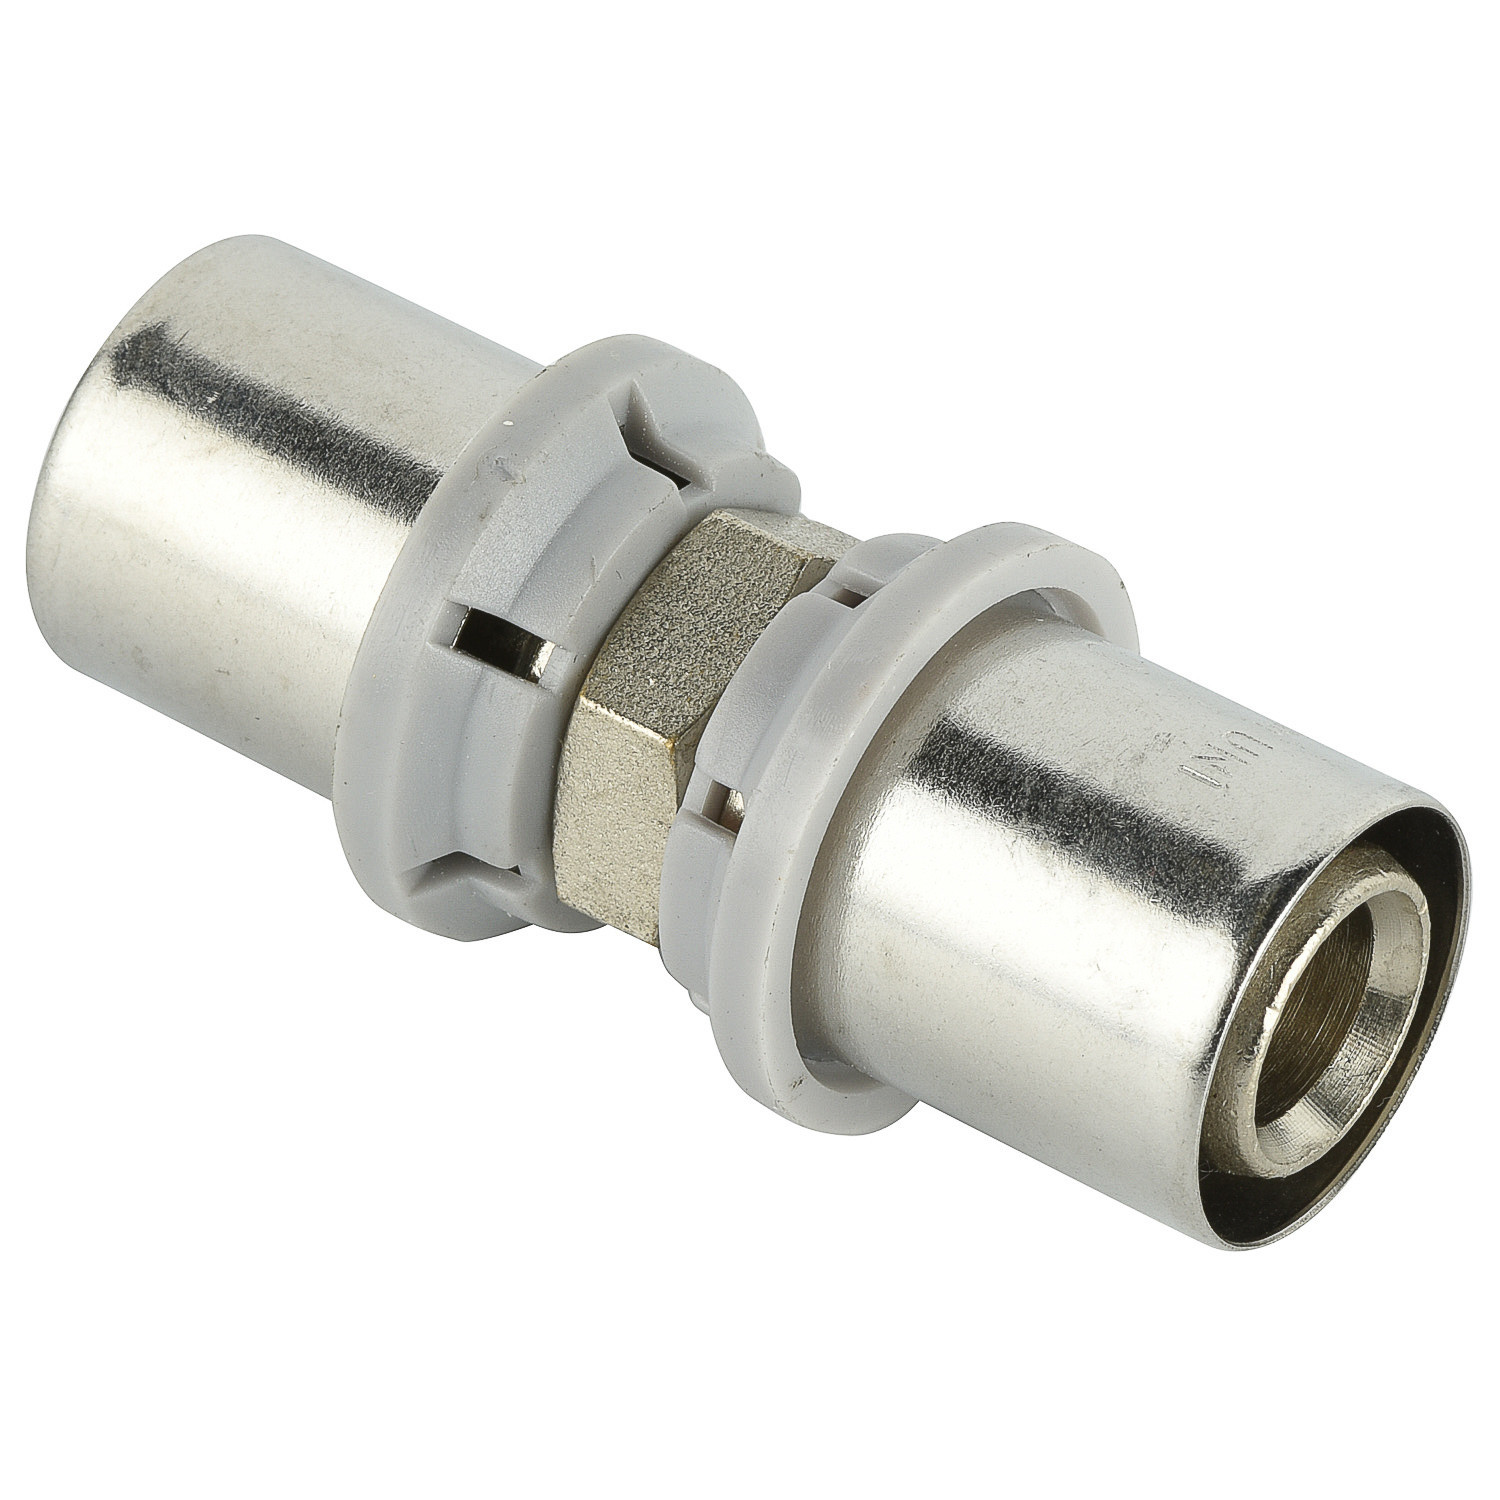 Best brass u type press straight female connector fittings for plumbing multiayer pex al pex pipe wholesale